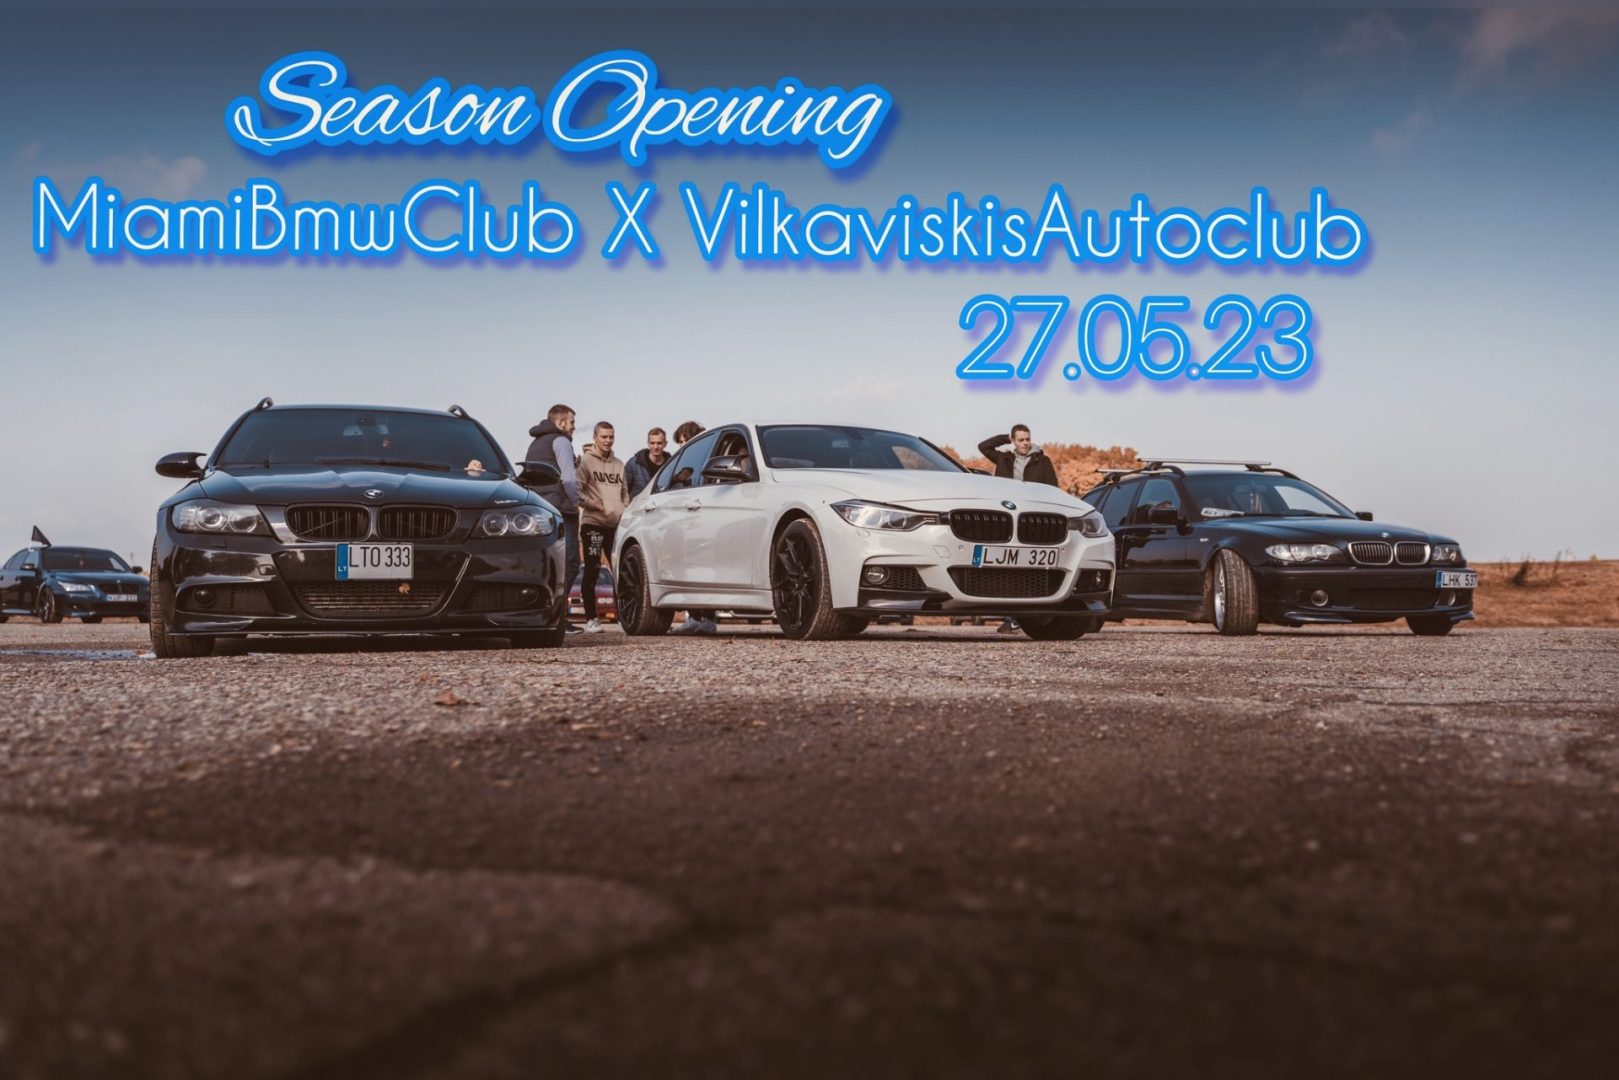 Season Opening! MiamiBmwClub X VilkaviskisAutoclub